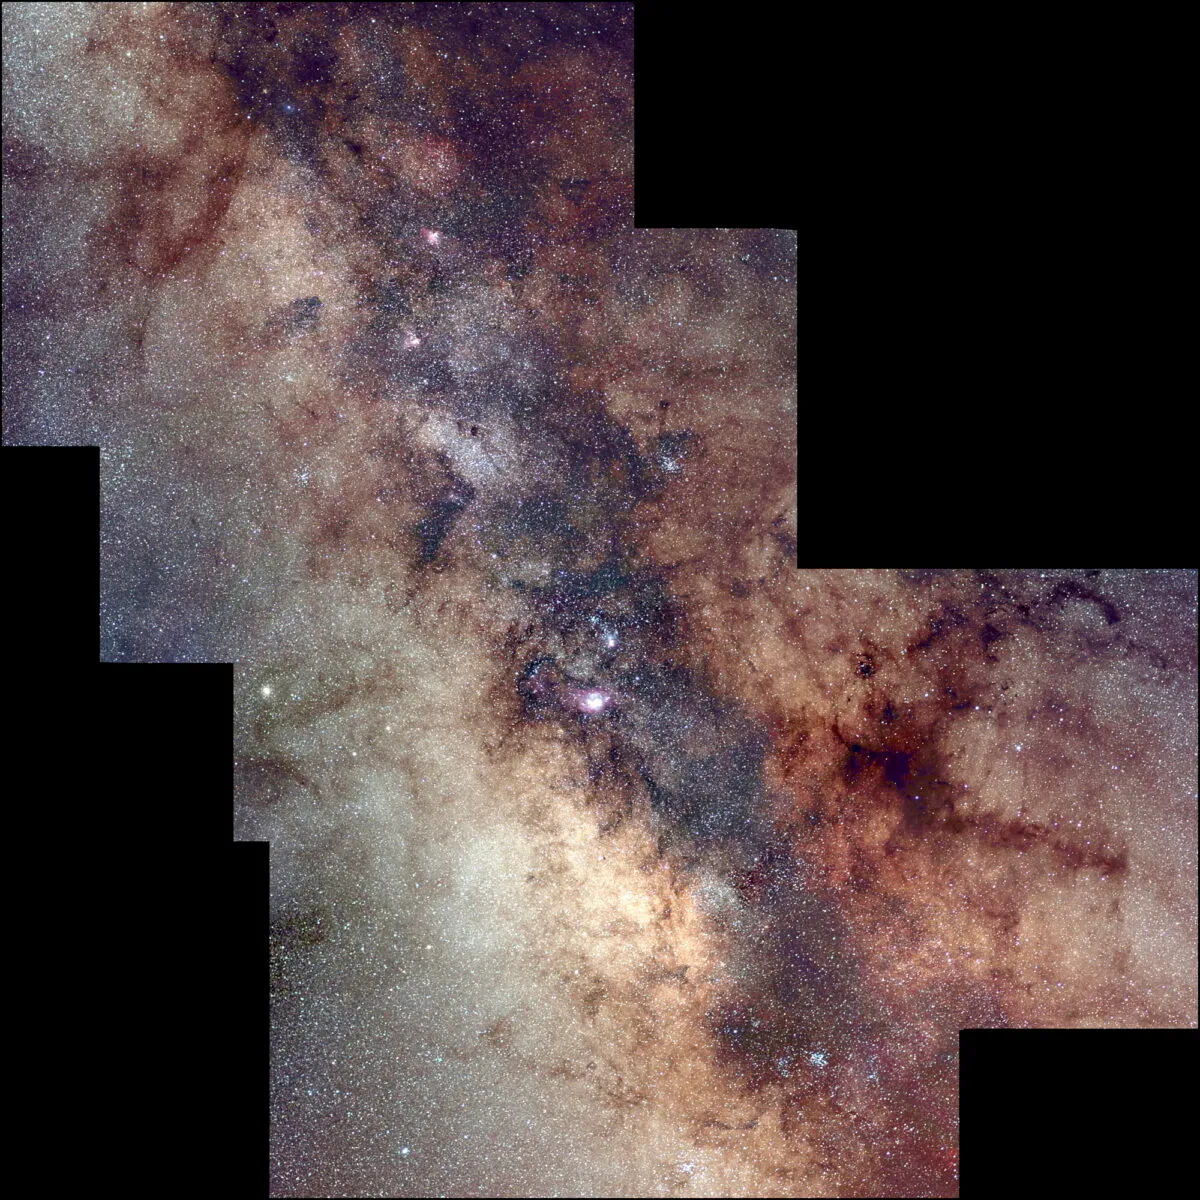 Milky Way Mosaic by Steve Barrett, Teide Observatory, Tenerife. Equipment: Nikon D7100, 85mm f/1.8 lens, iOptron SkyTracker